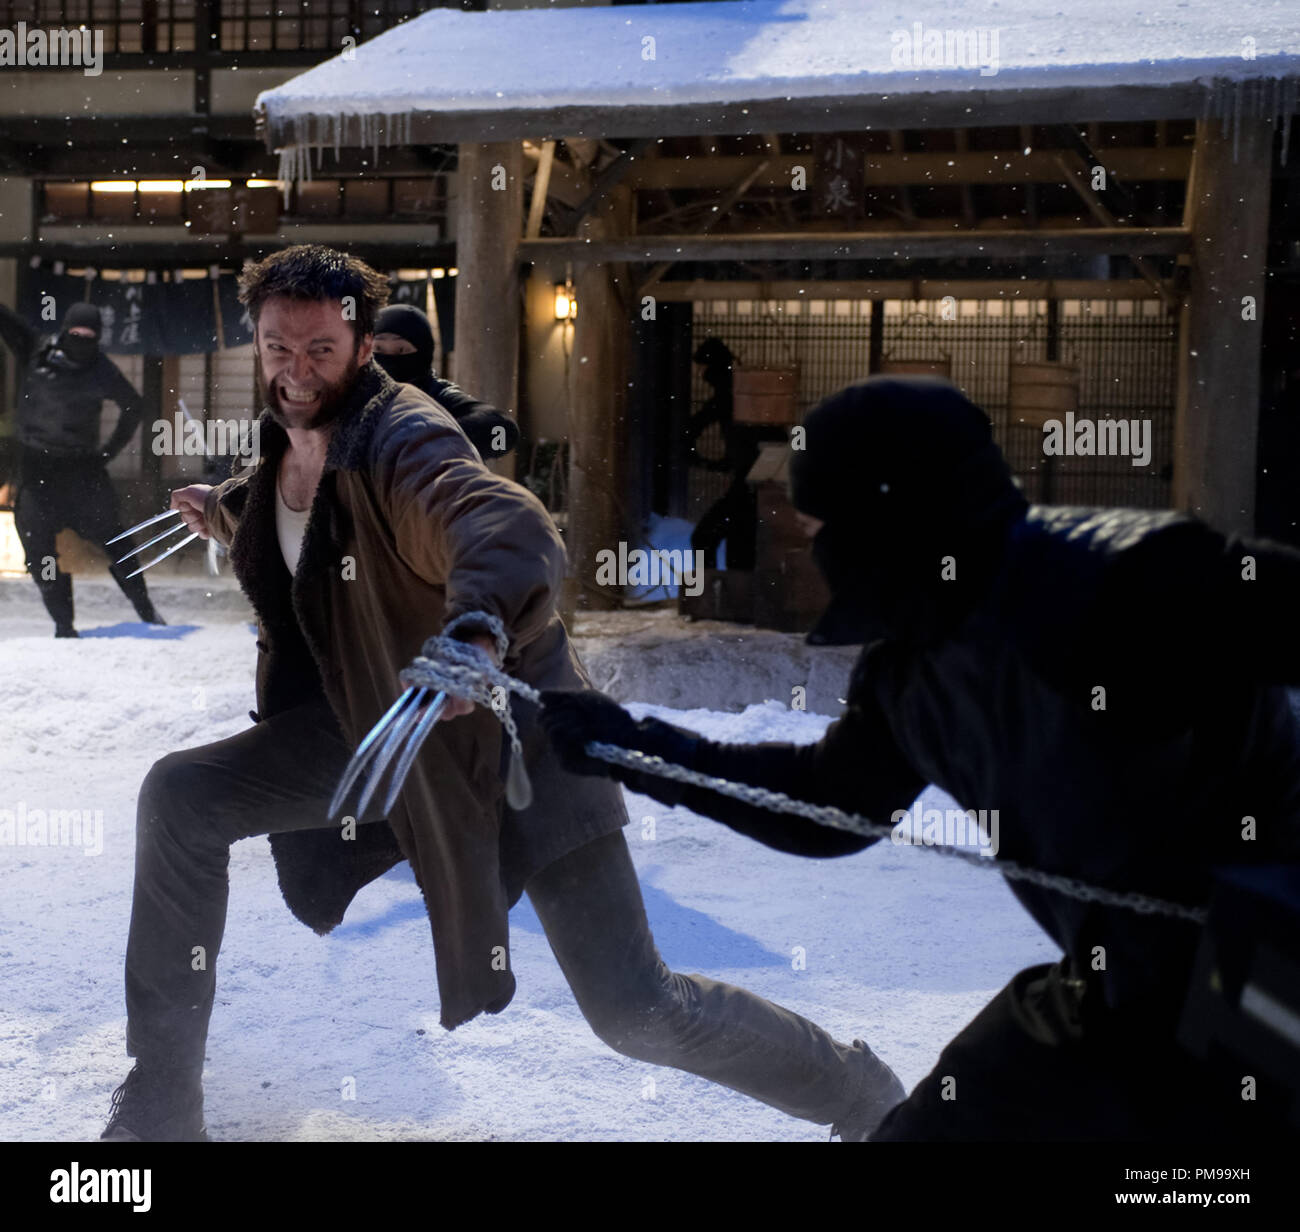 THE WOLVERINE. Logan (Hugh Jackman) battles ninja warriors. Photo credit: Ben Rothstein. Stock Photo